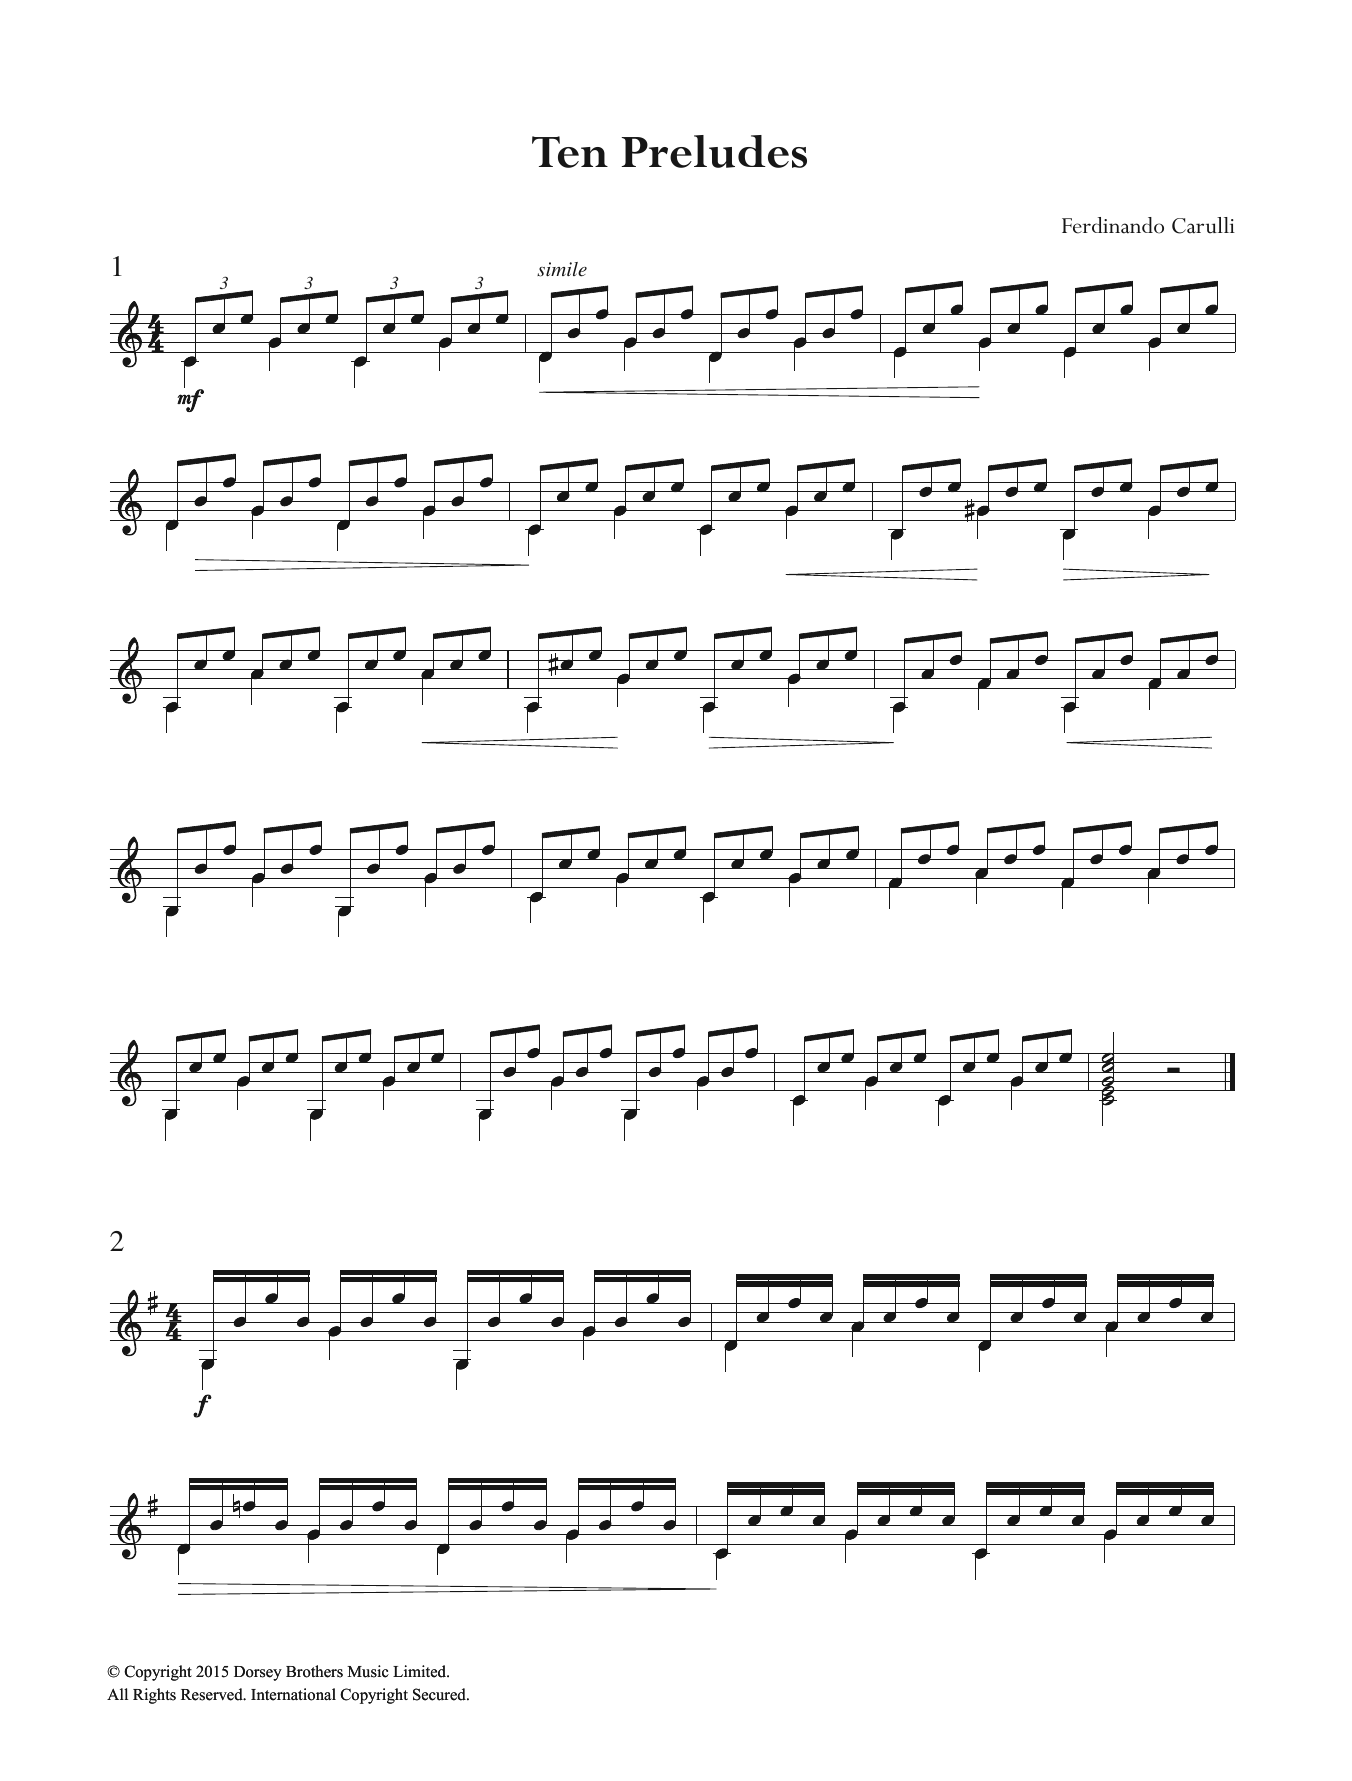 Ferdinando Carulli Ten Preludes Sheet Music Notes & Chords for Guitar - Download or Print PDF